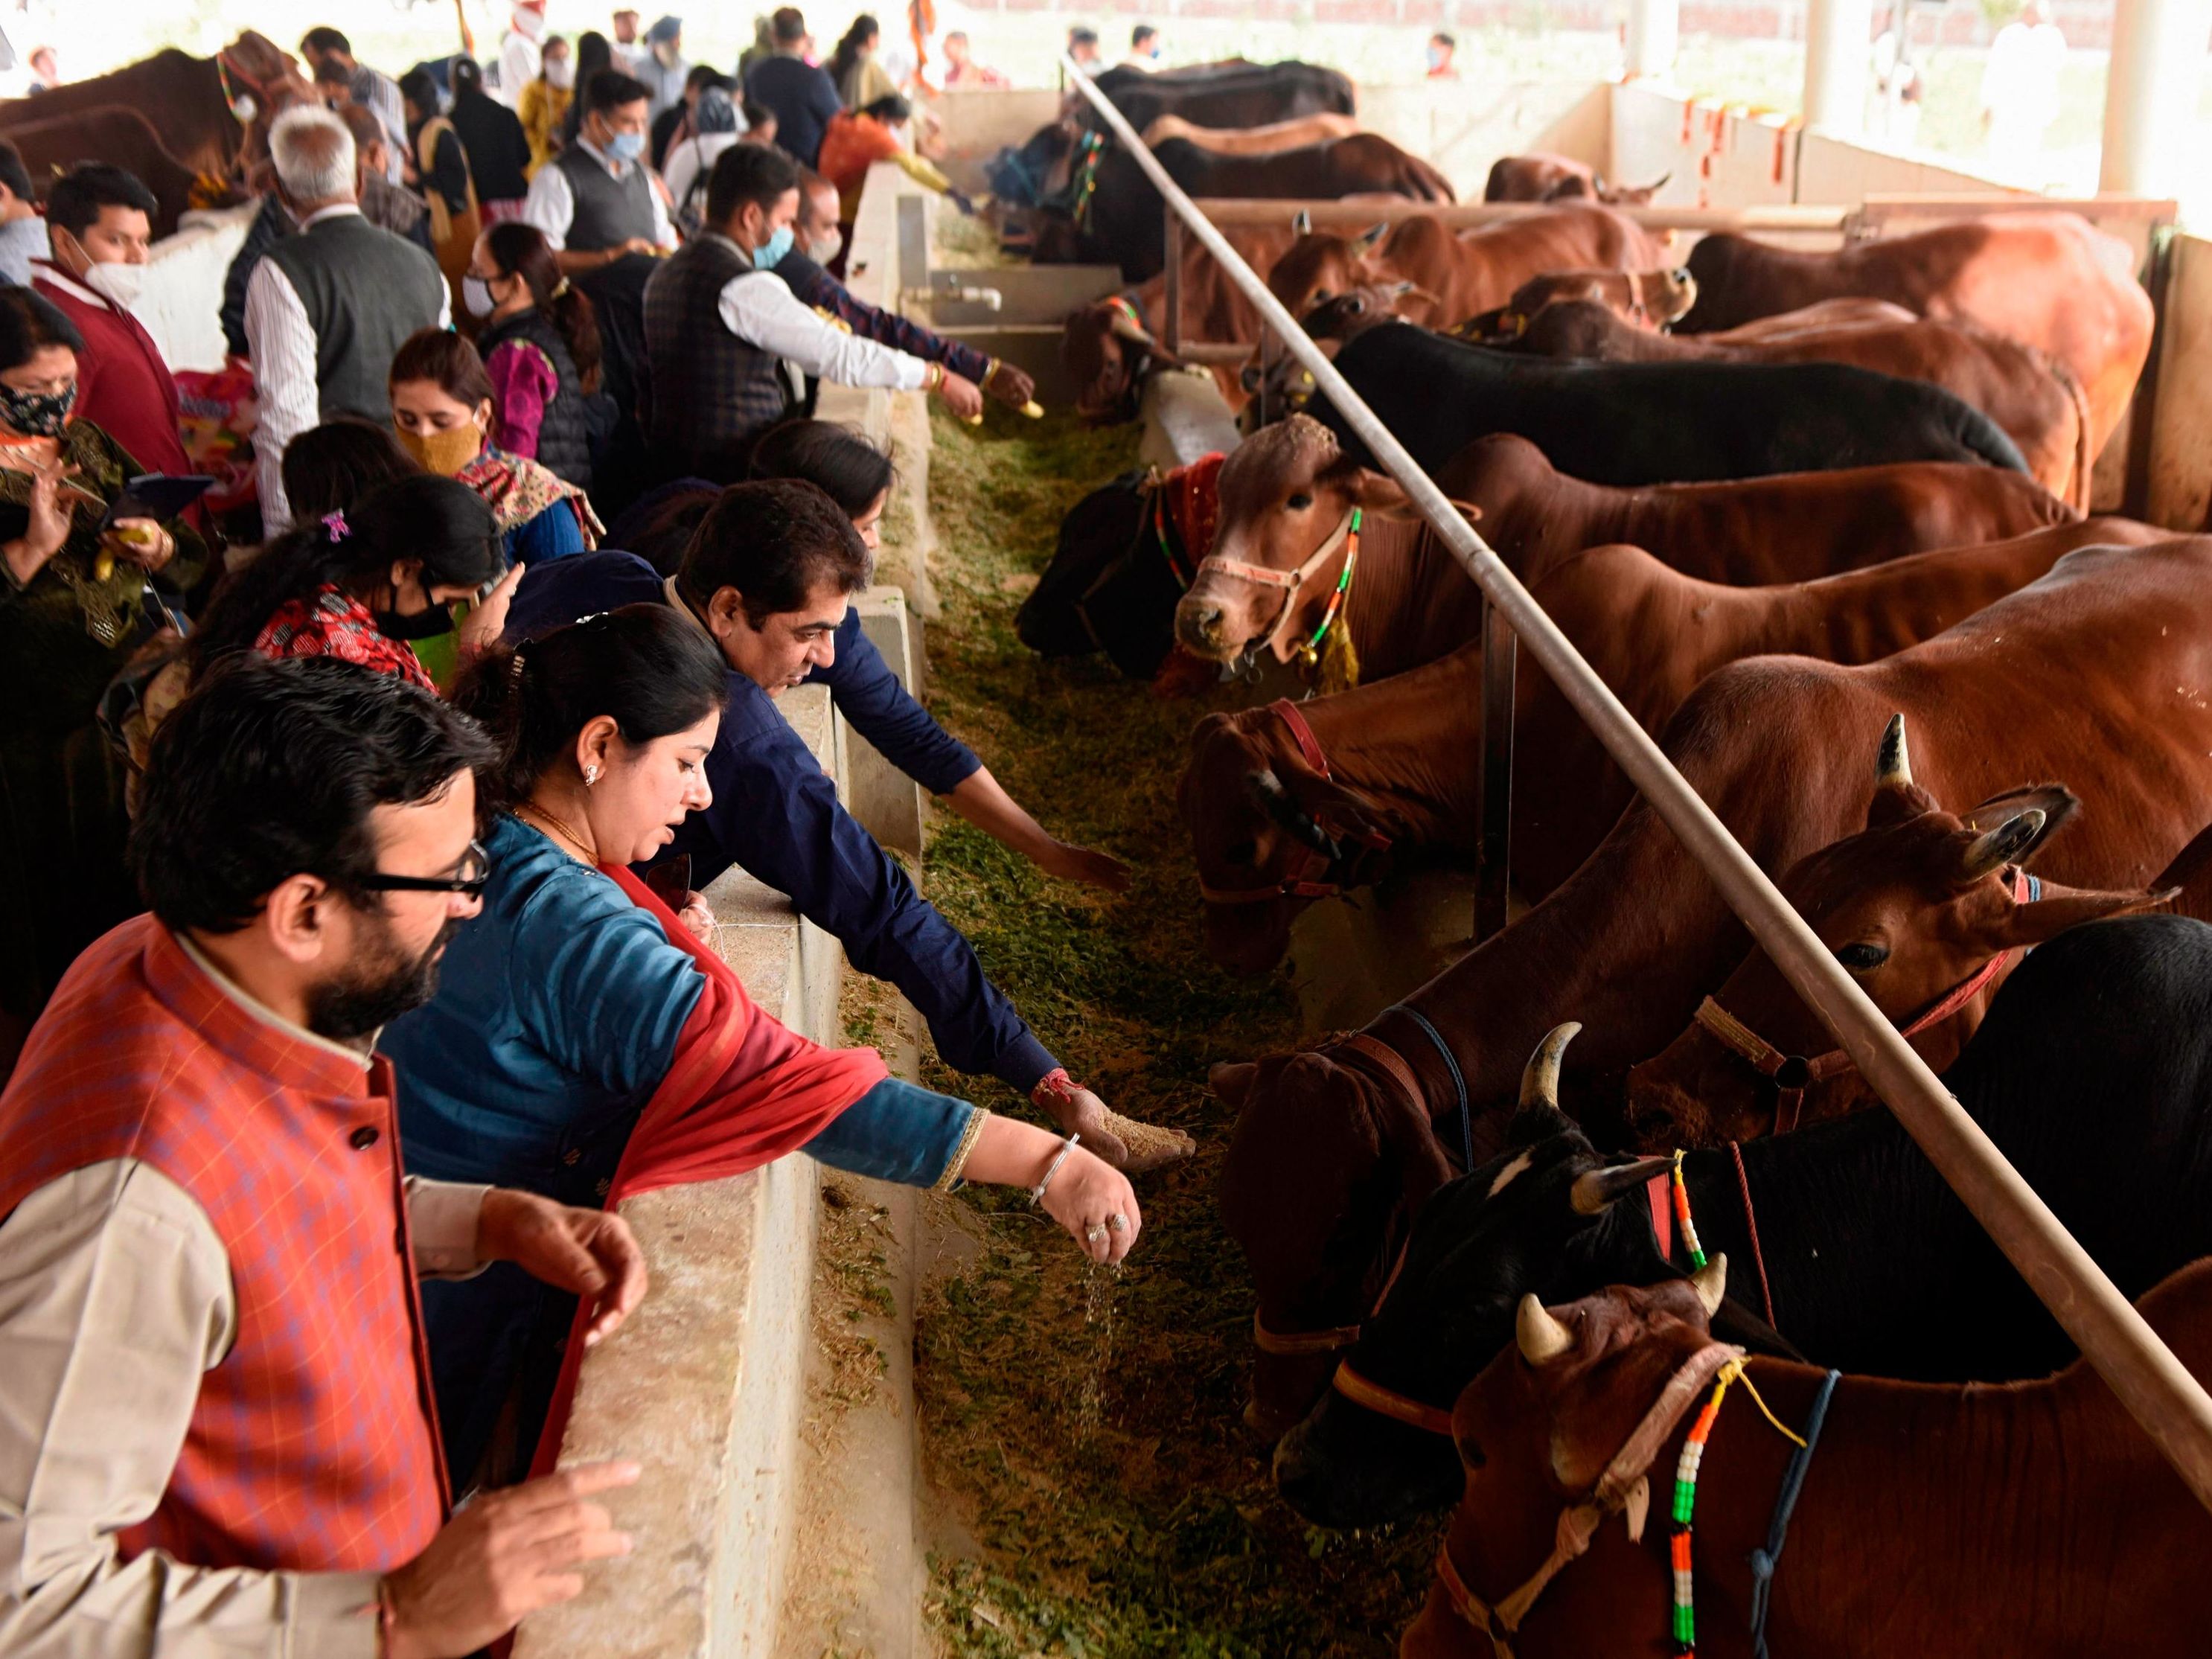 India's new 'cow science' exam politicizes sacred animal, critics say | CNN